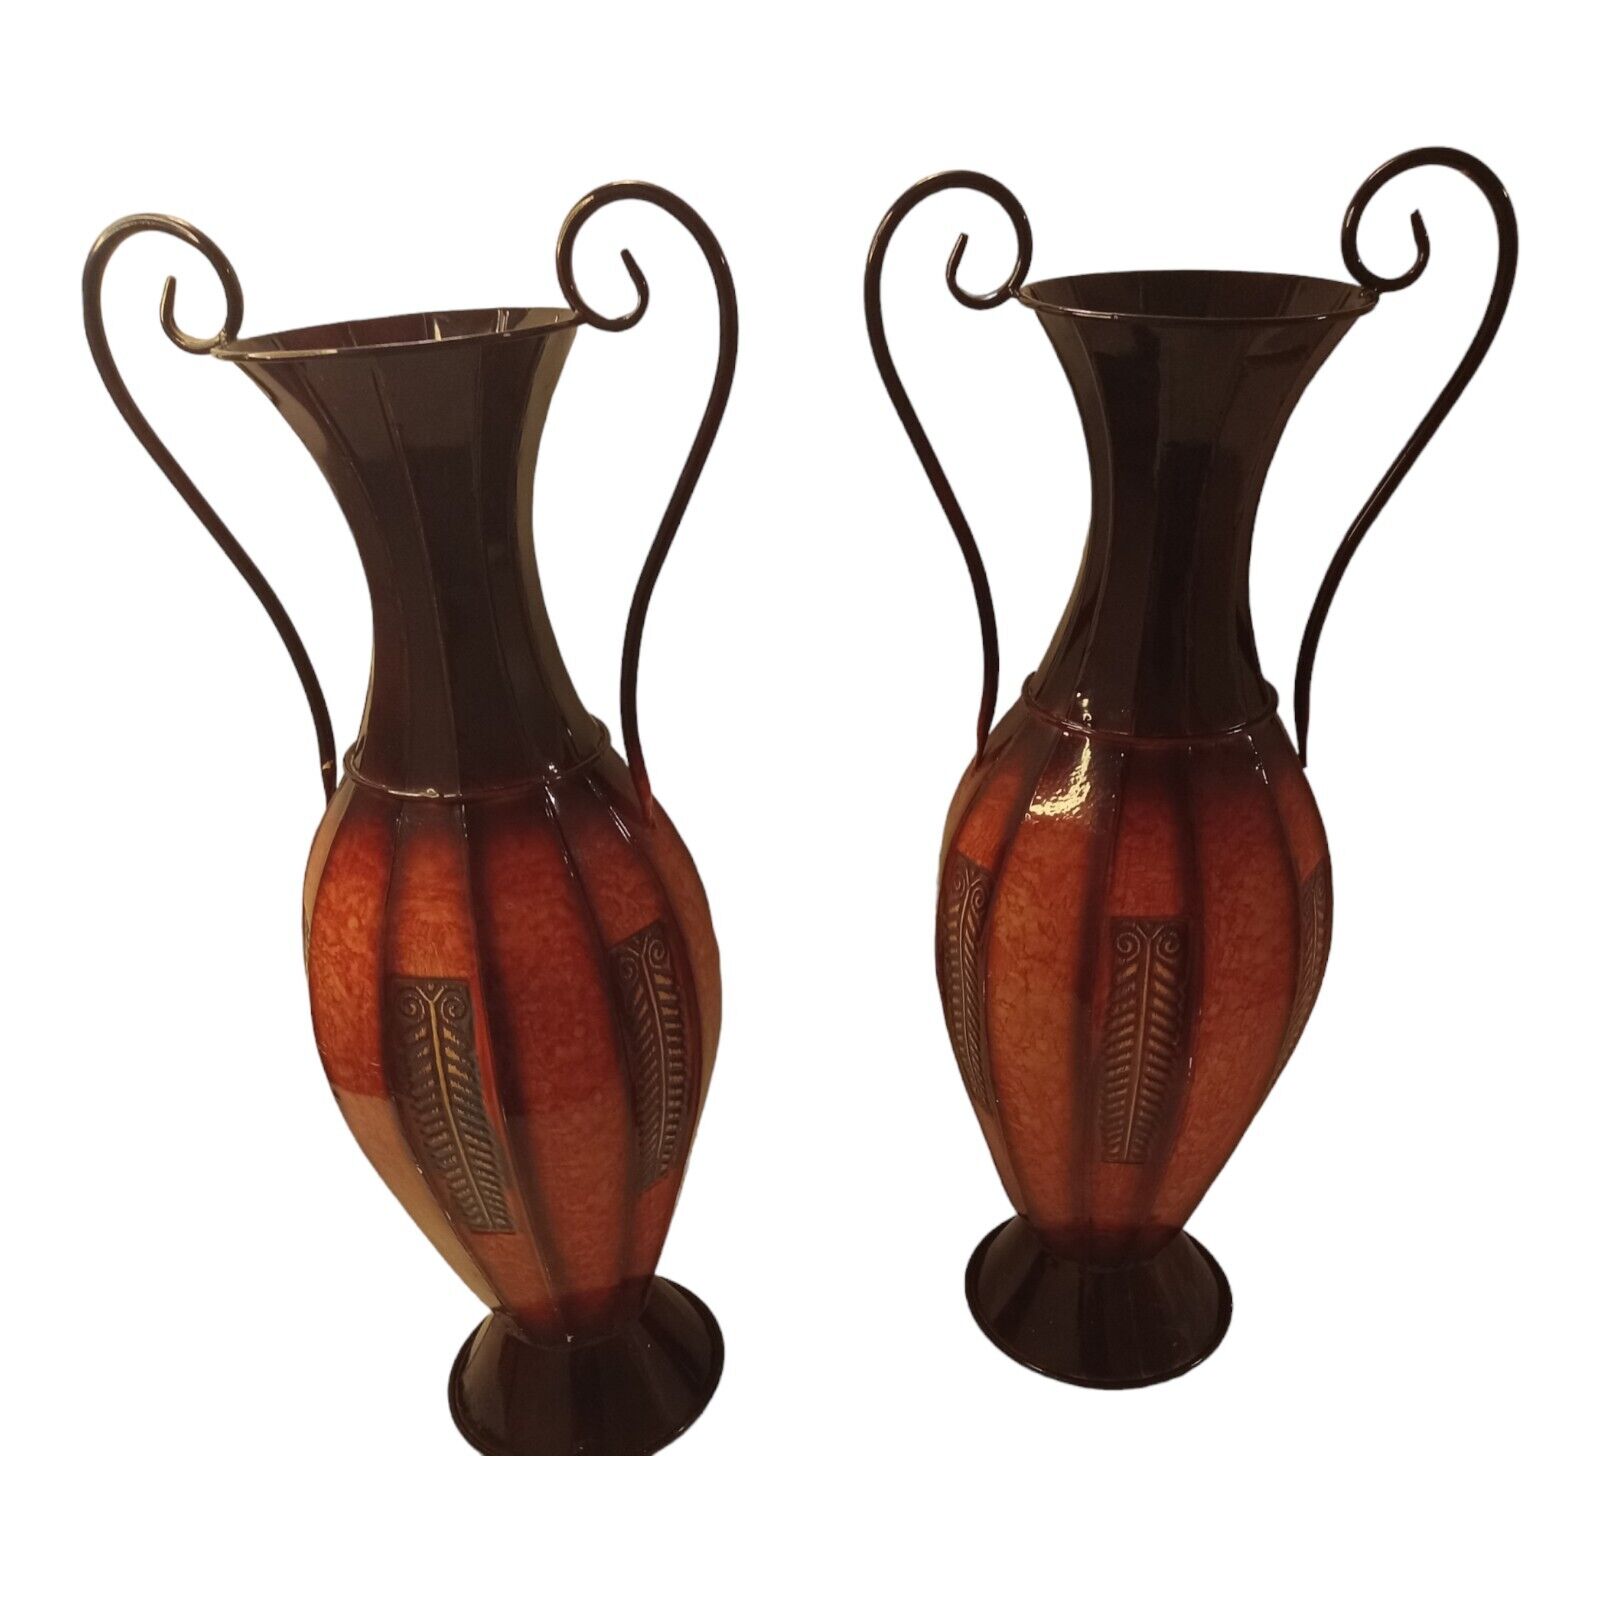 2 Metal Hosley  Cylindrical Floor Vases With Handles